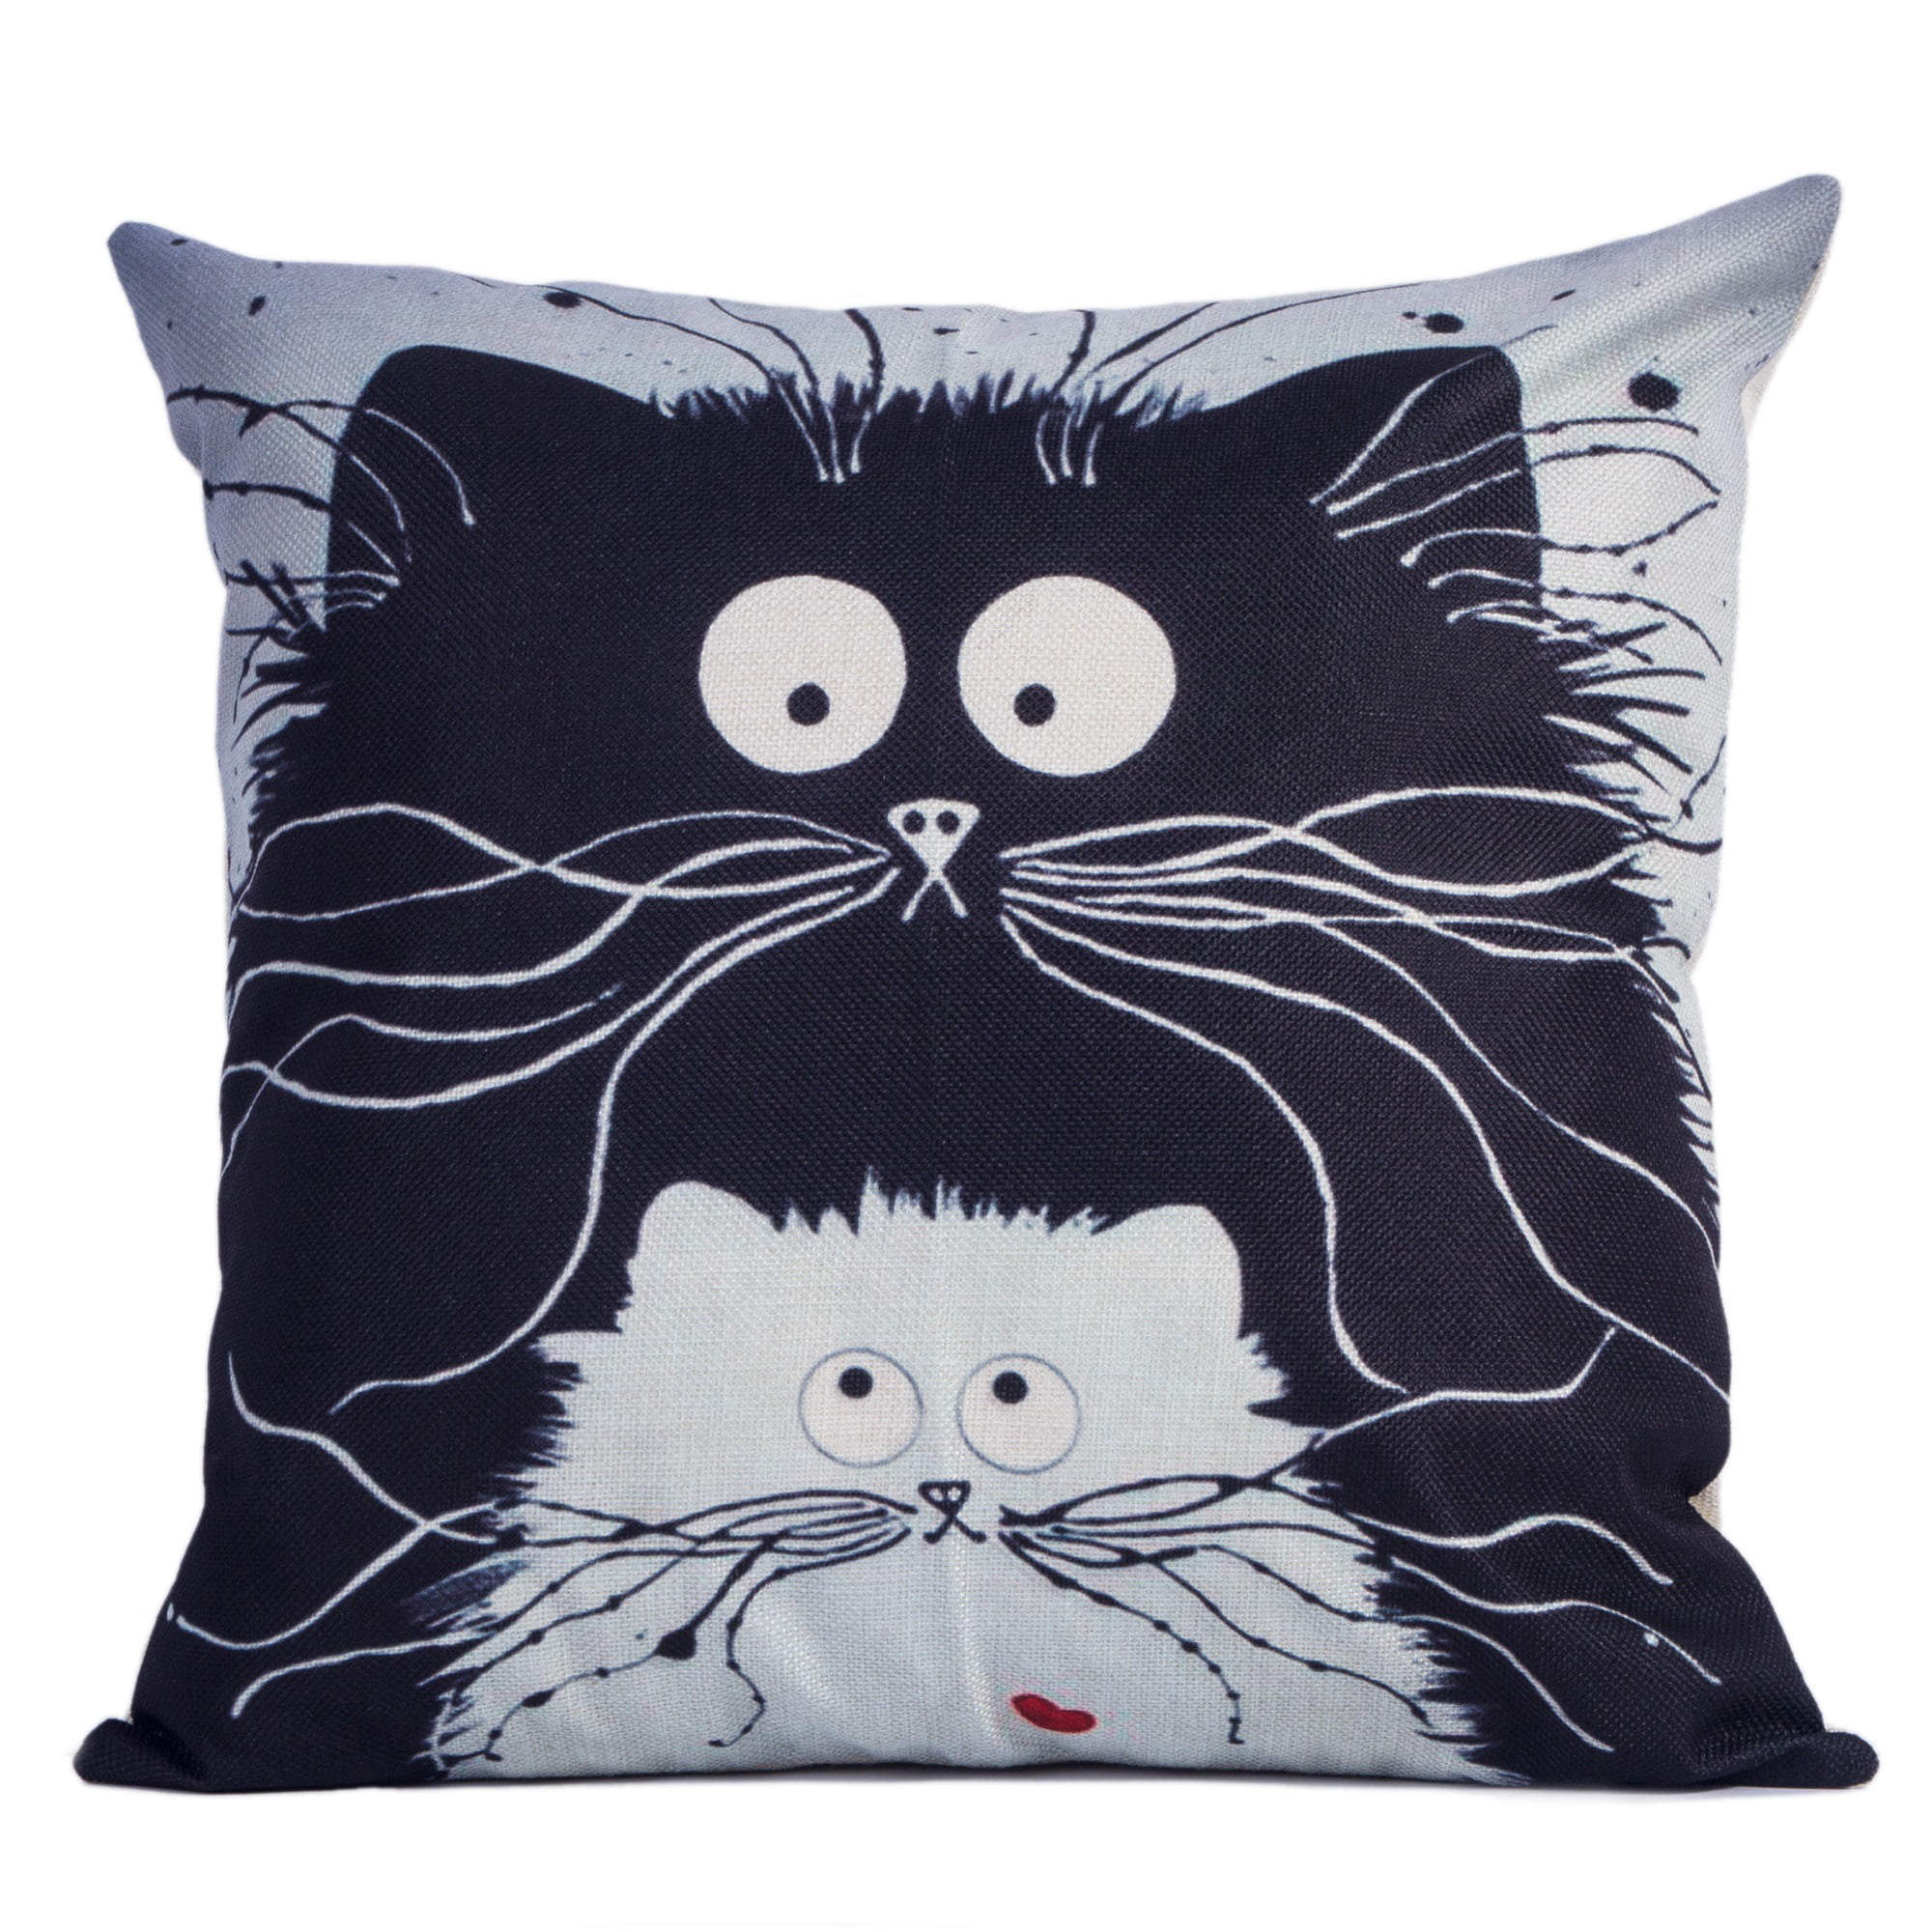 18" Square Sofa Pillow Cover Case Cute Cat Cotton Linen Cushion Cover Home Decor 